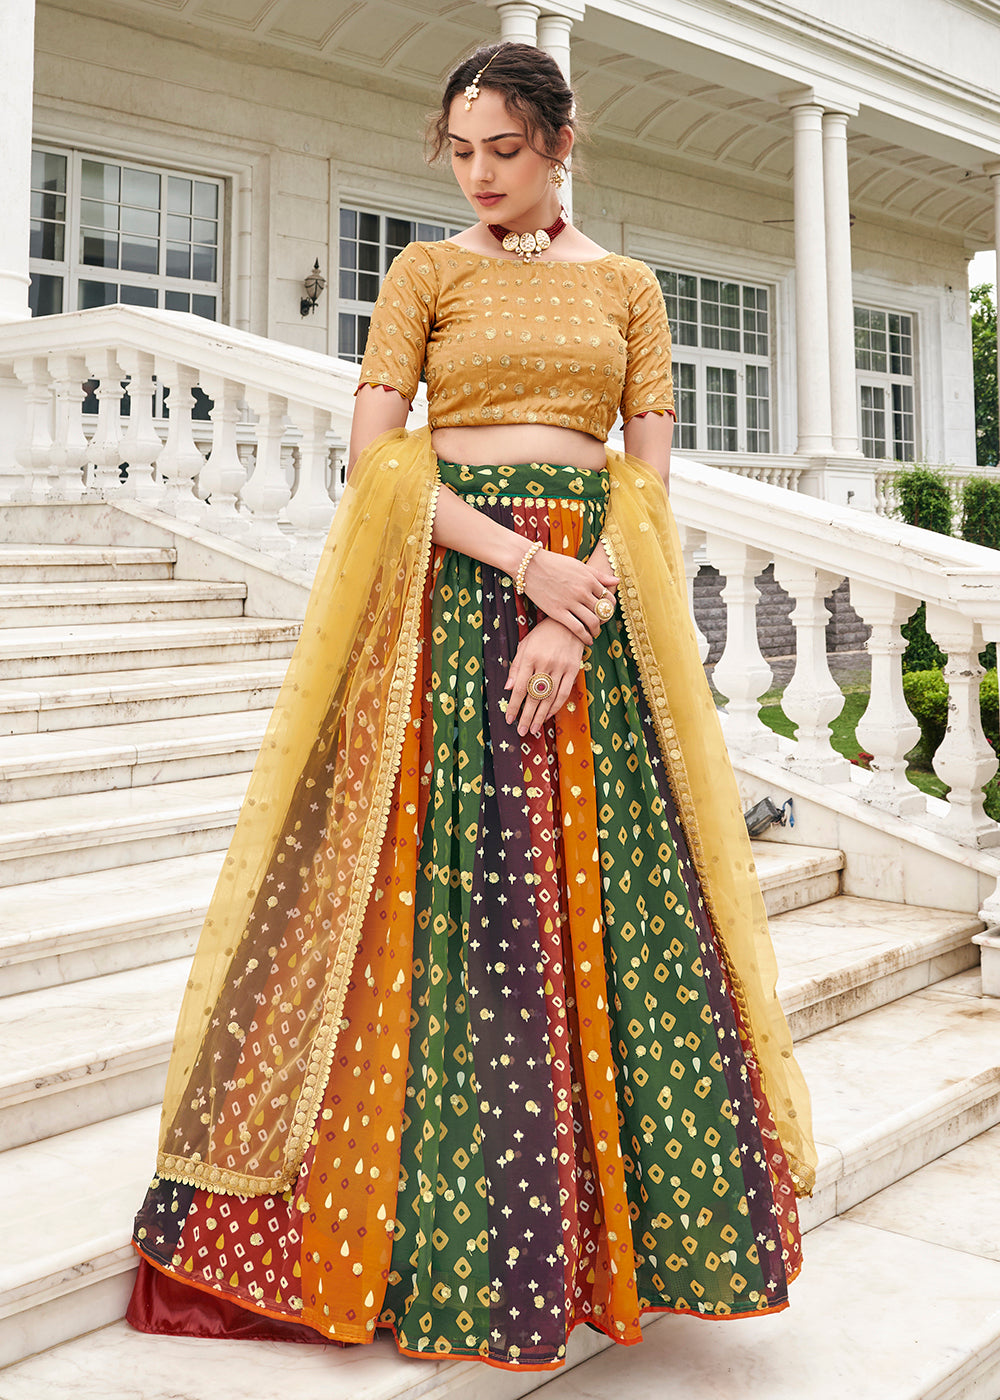 Buy Now Superior Multicolor & Gold Printed Wedding Lehenga Choli Online in USA, UK, Canada & Worldwide at Empress Clothing.